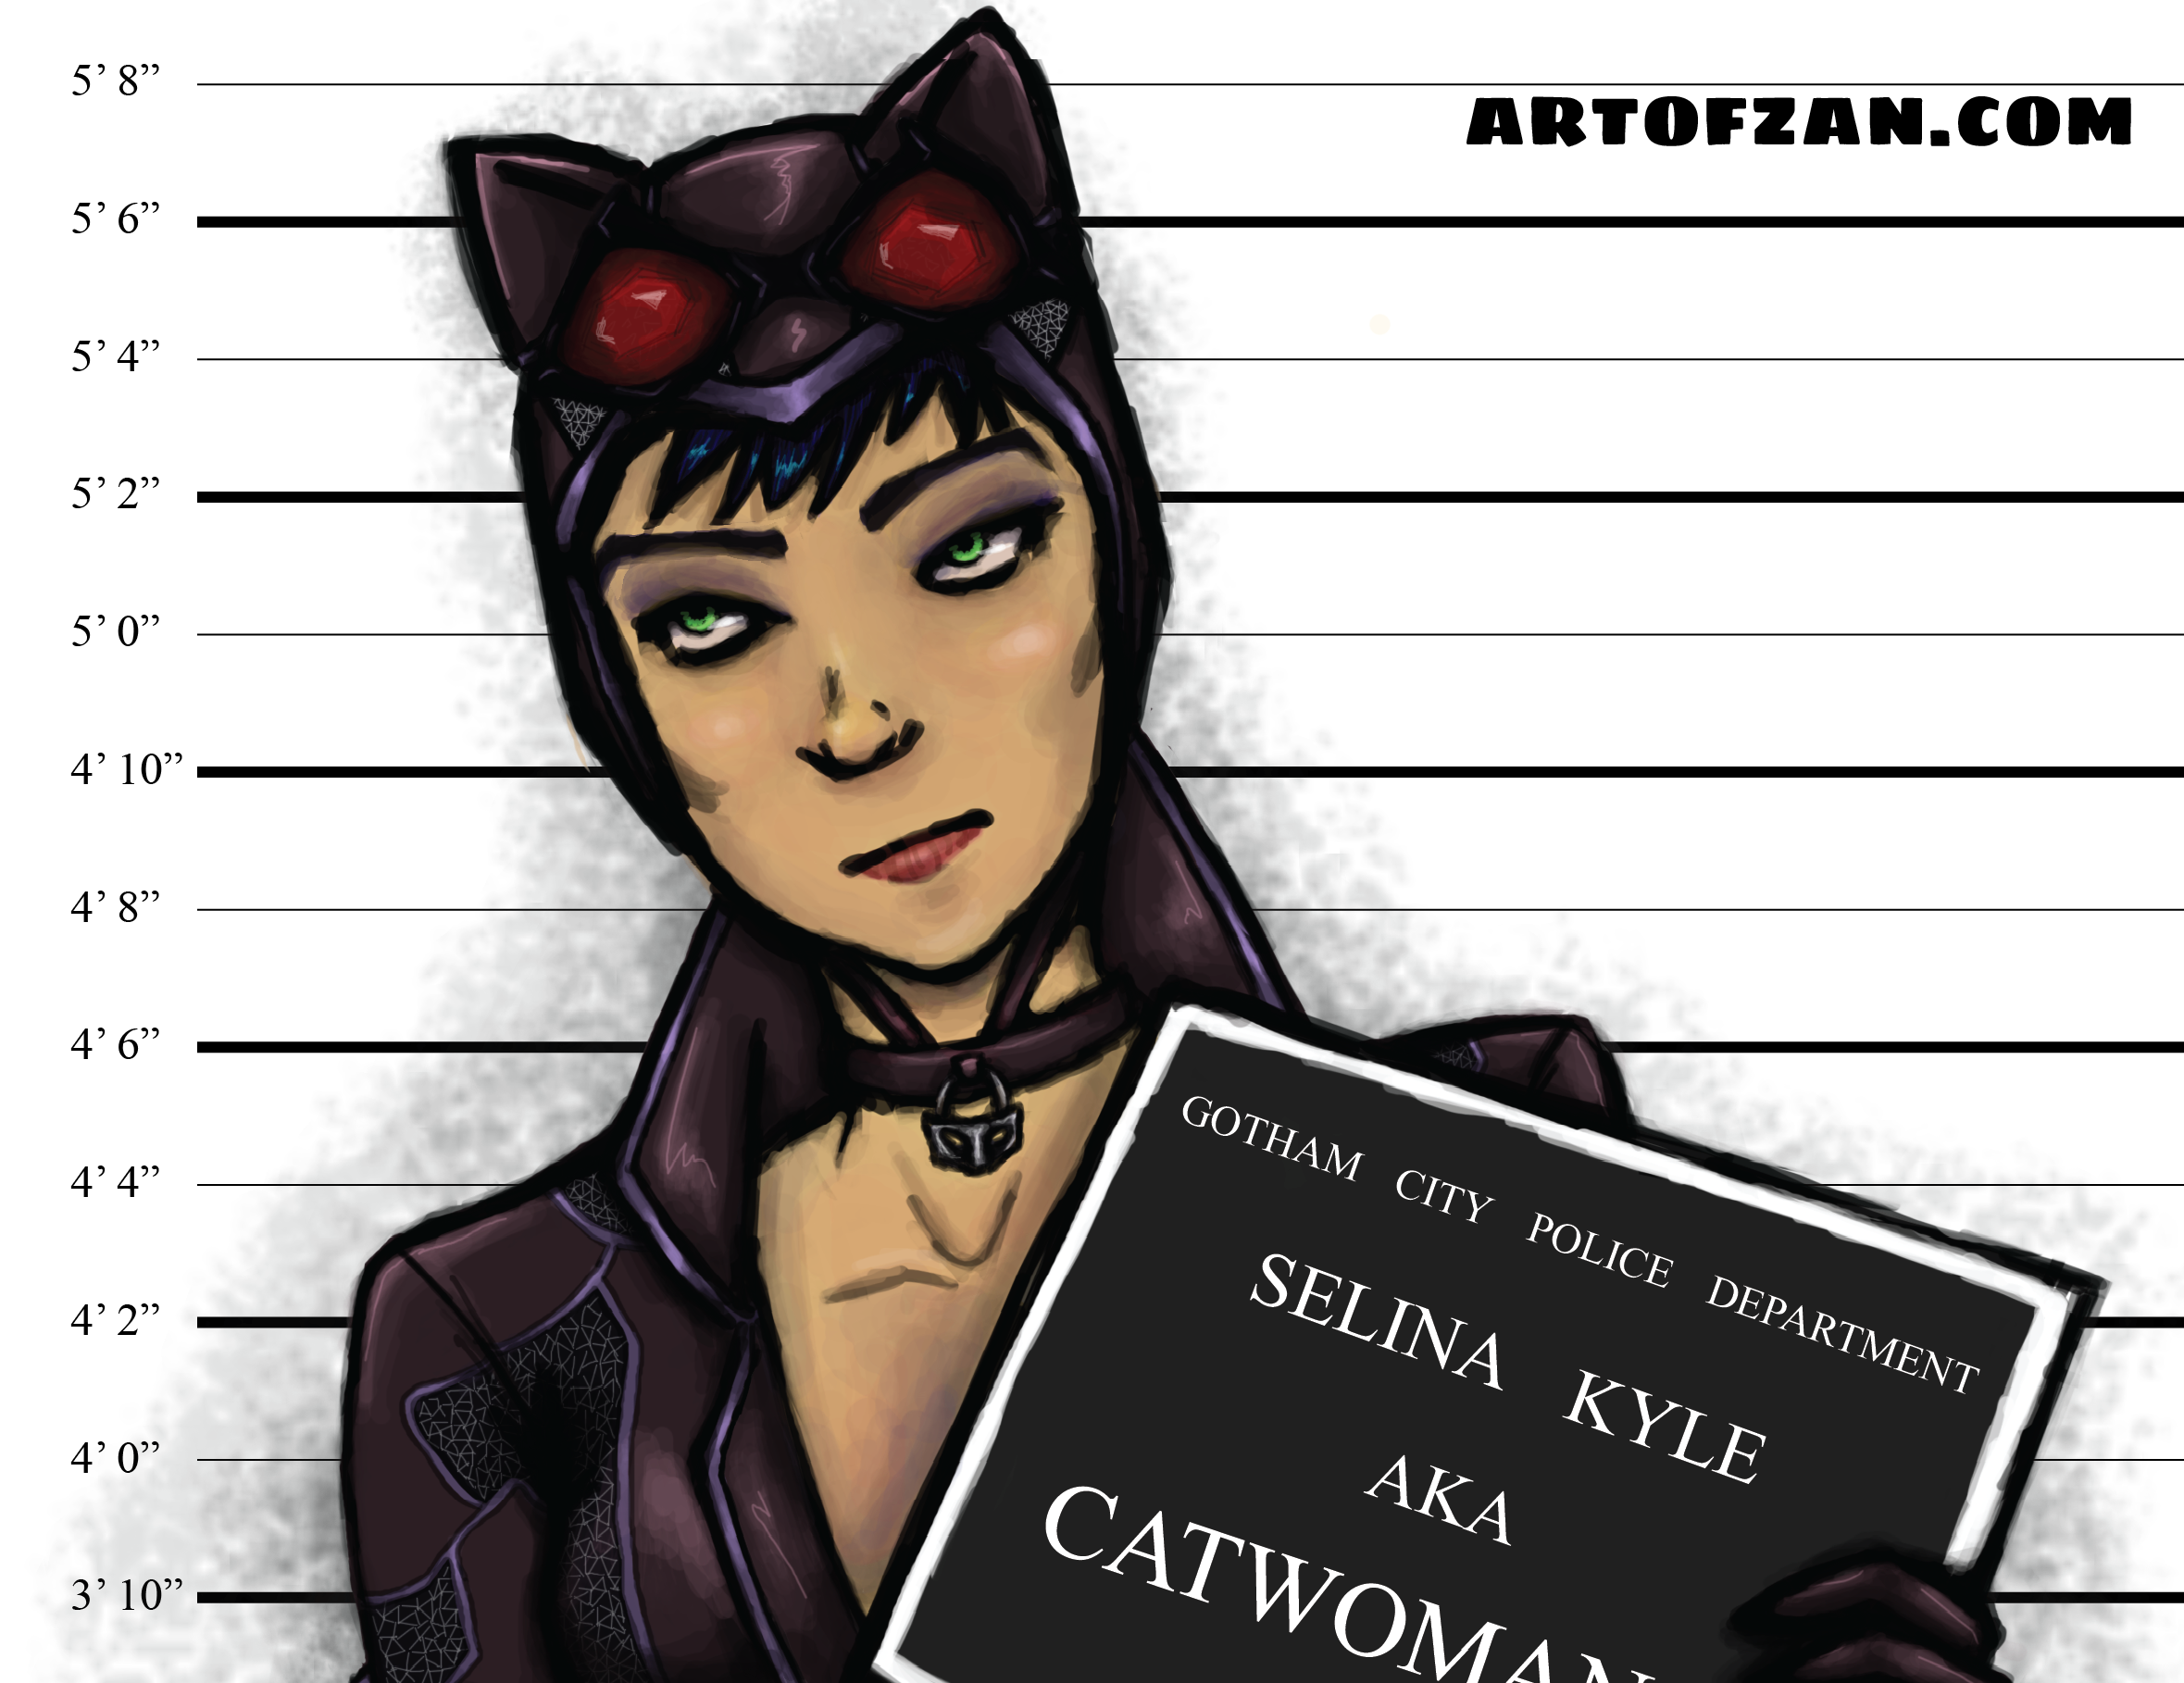 bman catwoman